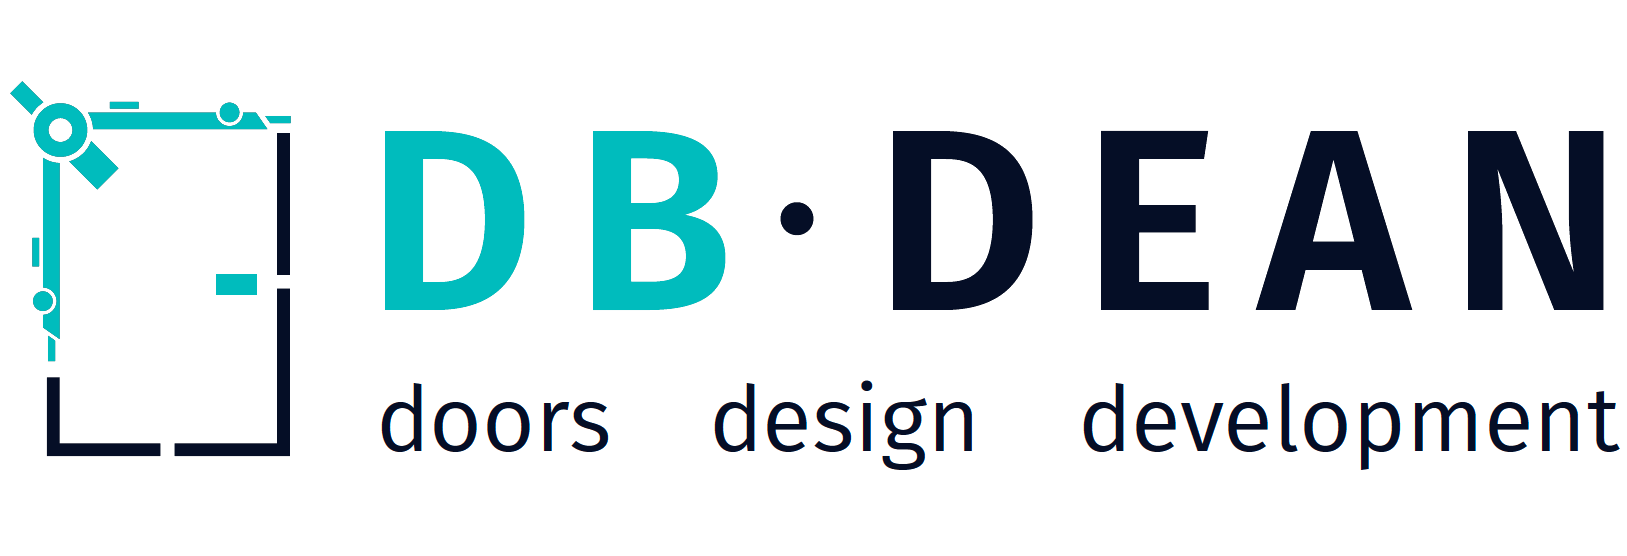 Company Logo Images